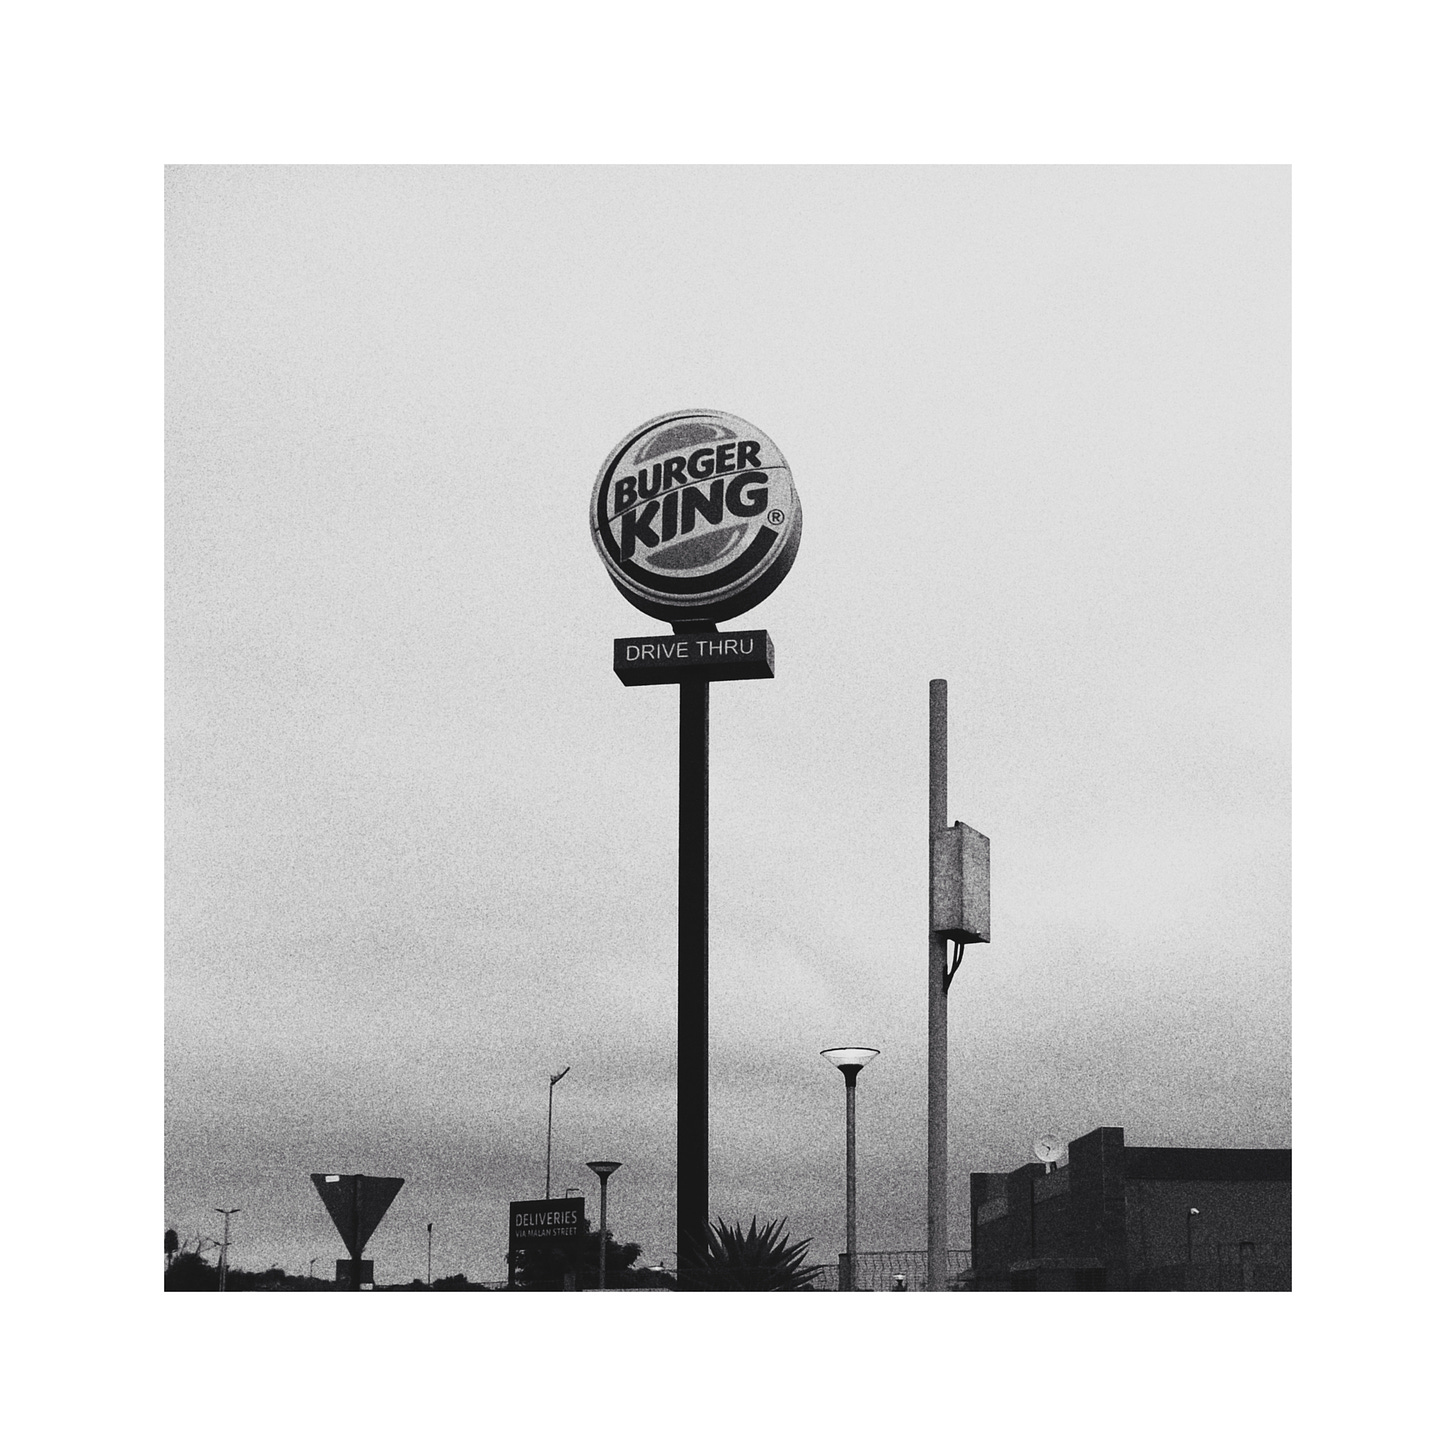 Image of a Burger King sign.